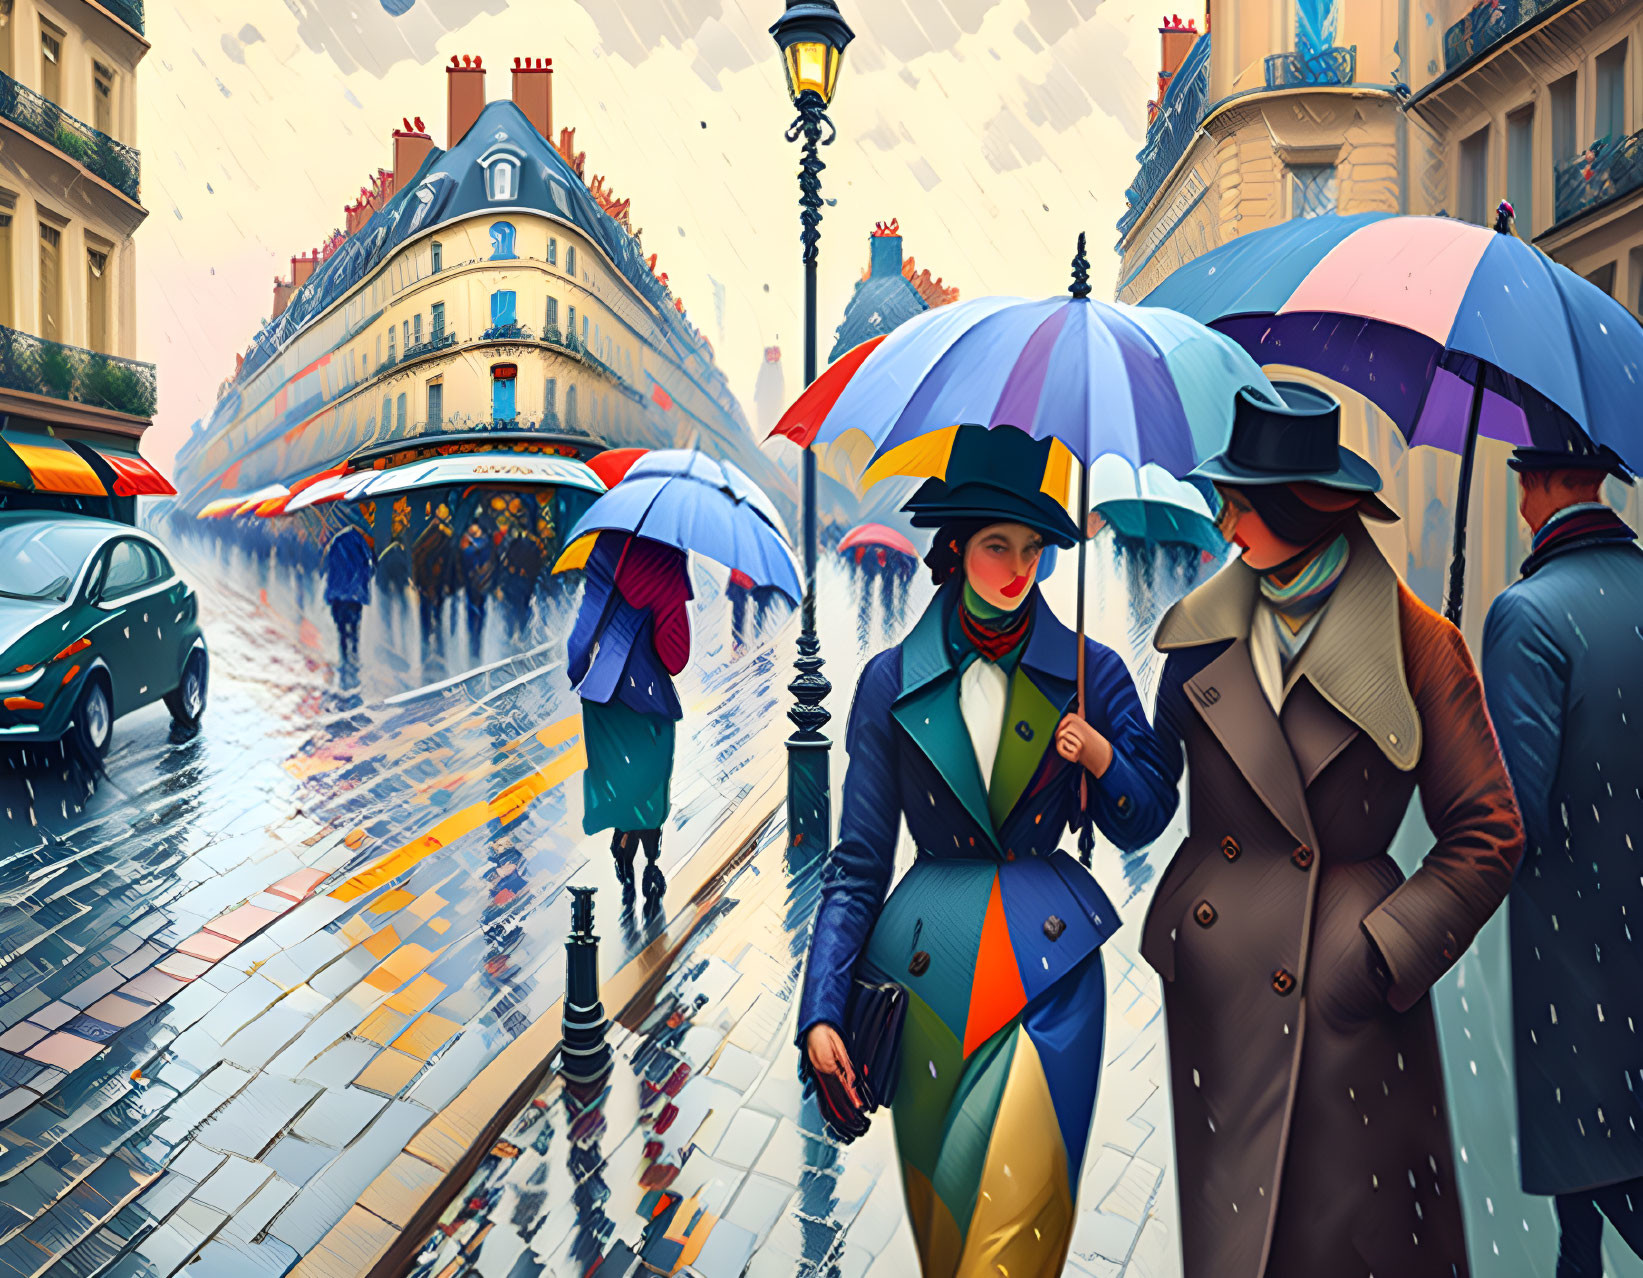 Vibrant umbrellas on rainy cobblestone street with classic architecture and stylish pedestrians